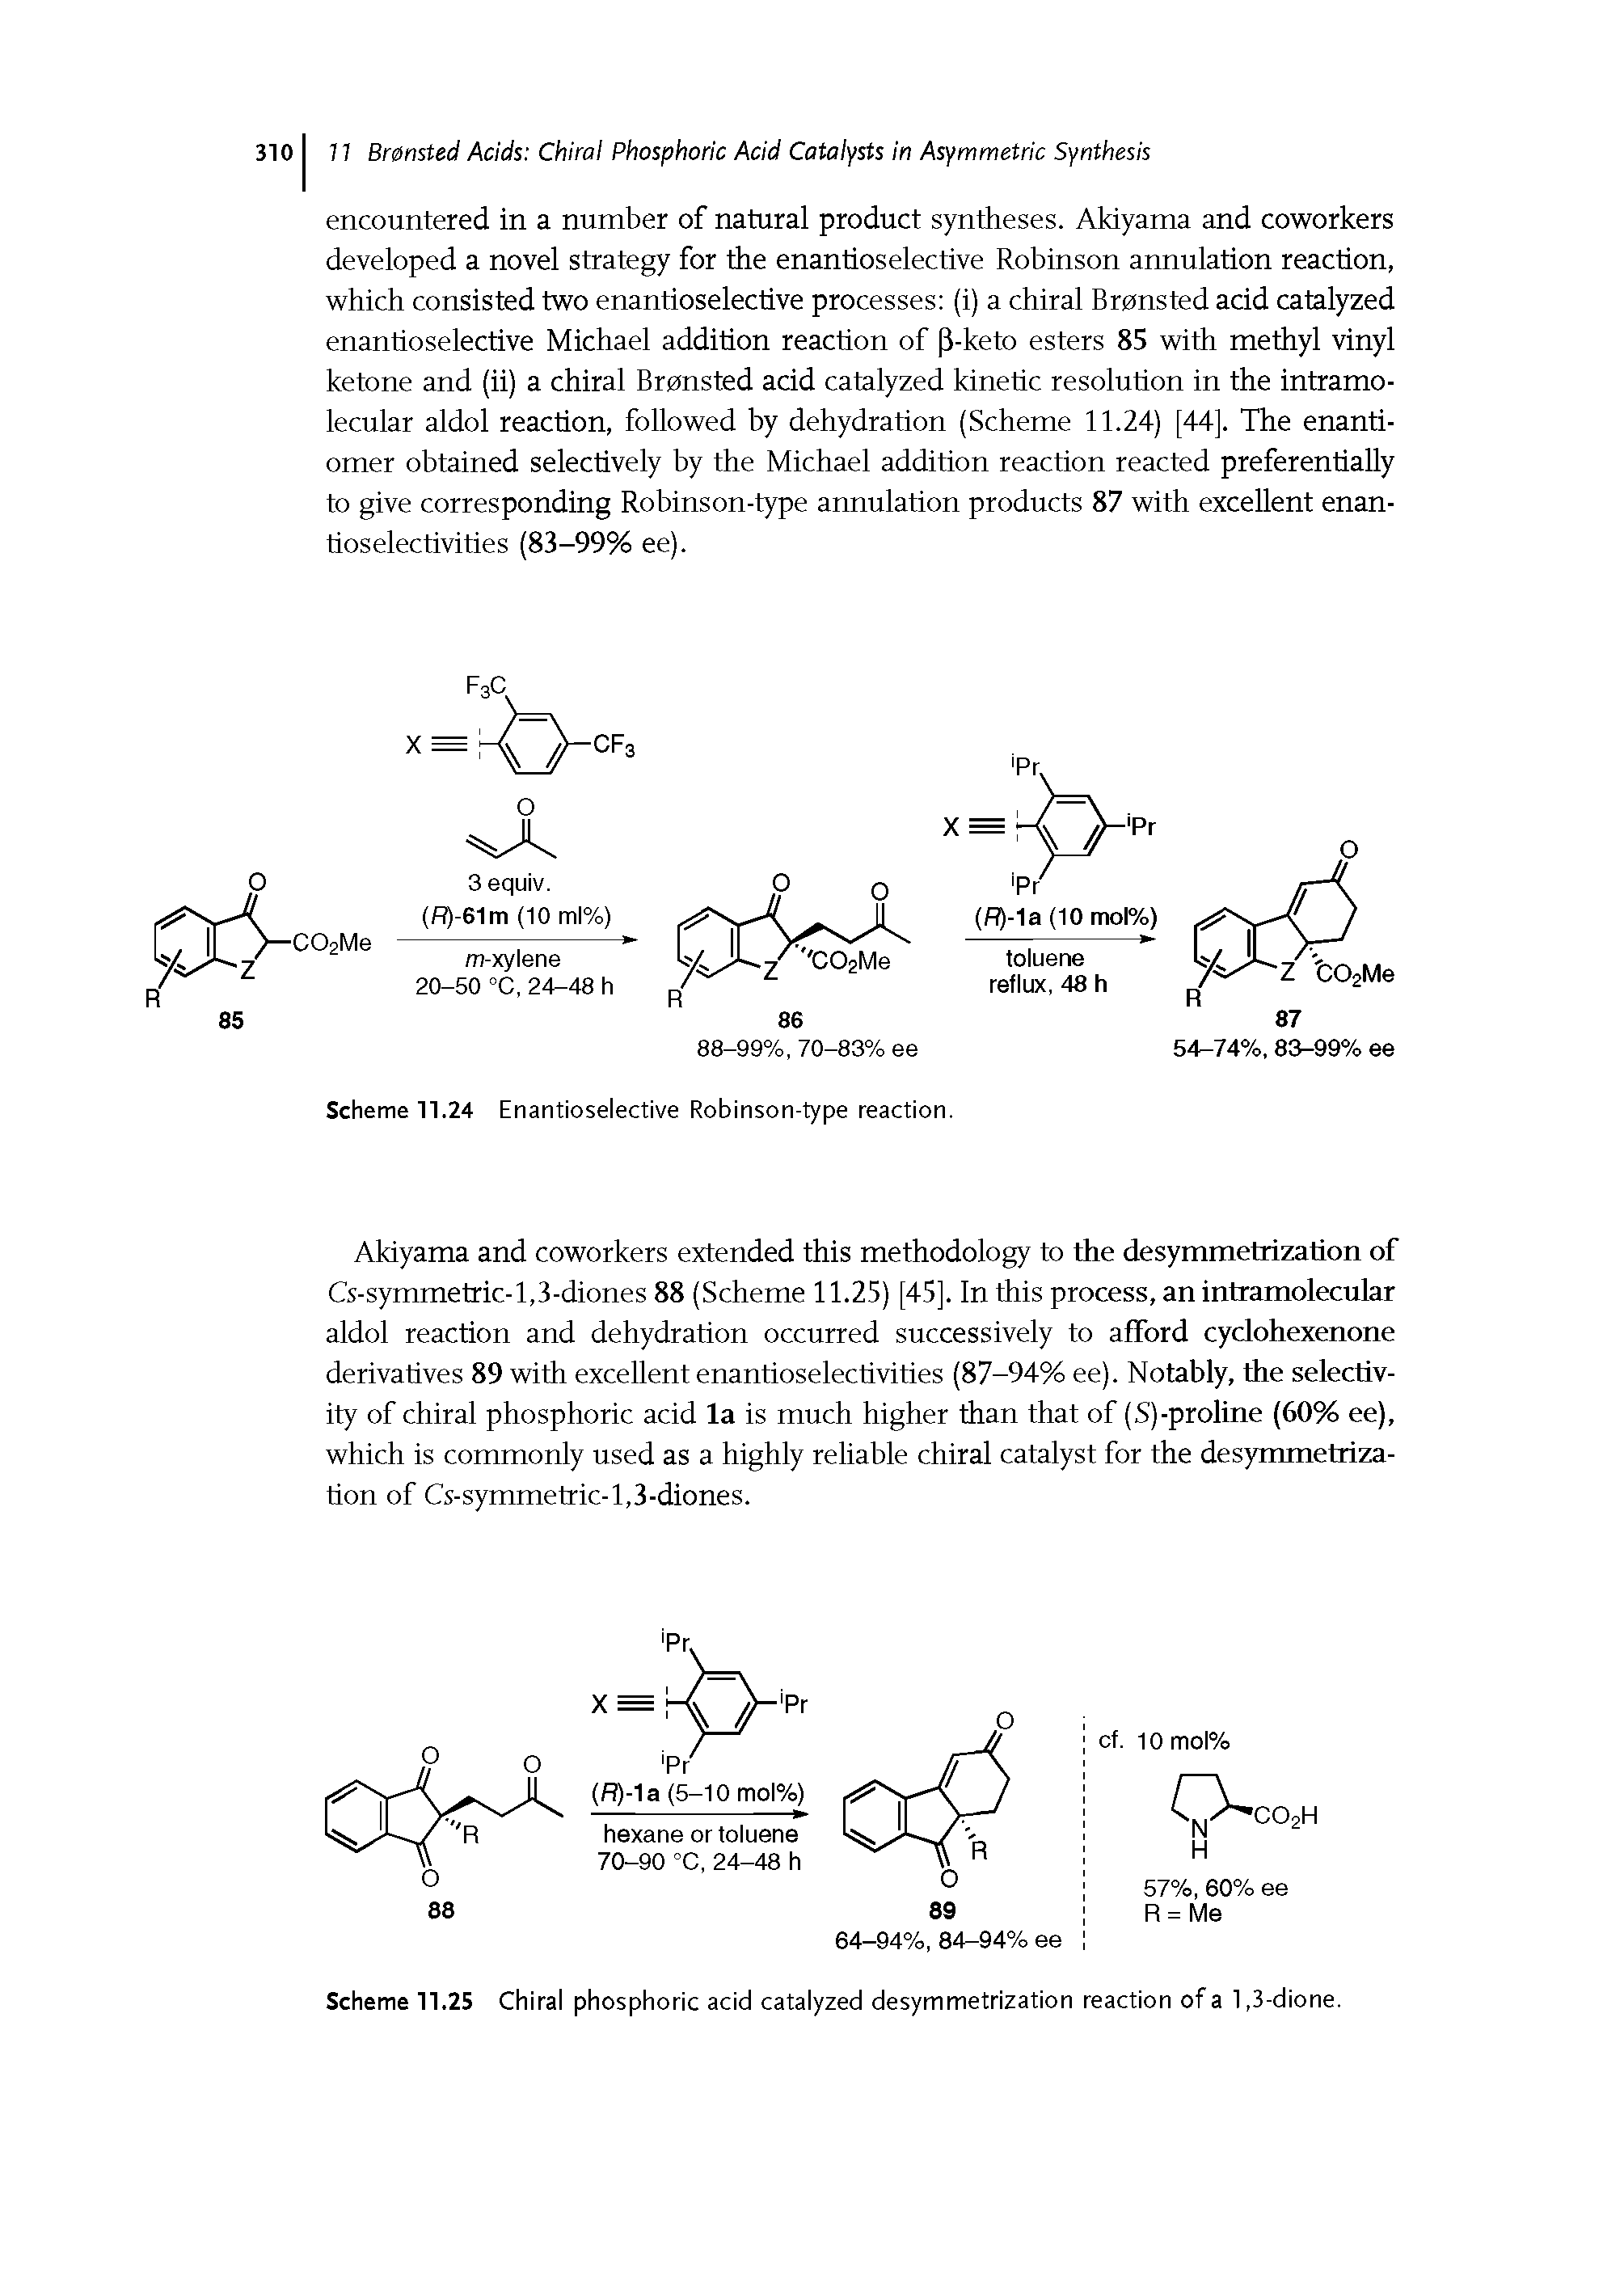 Scheme 11.25 Chiral phosphoric acid catalyzed desymmetrization reaction of a 1,3-dione.